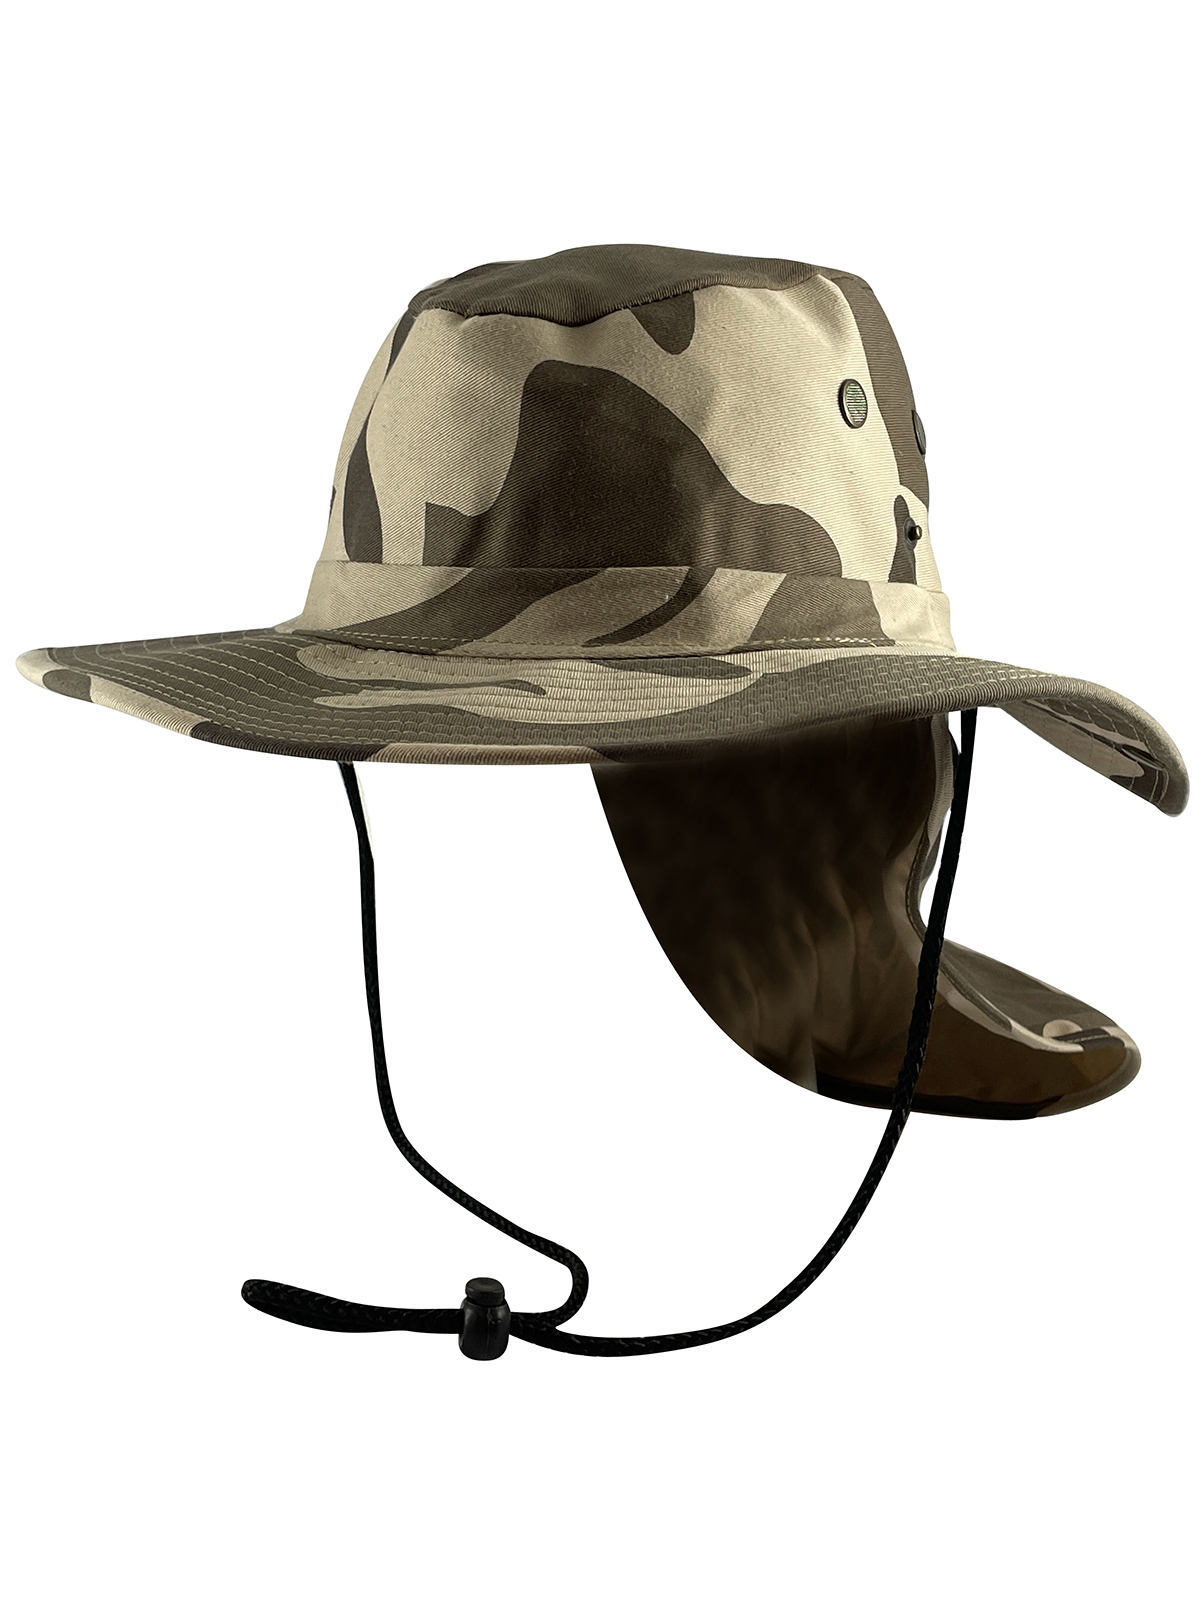 Top Headwear Safari Explorer Bucket Hat Flap Neck Cover - Desert Camo - M - image 1 of 3